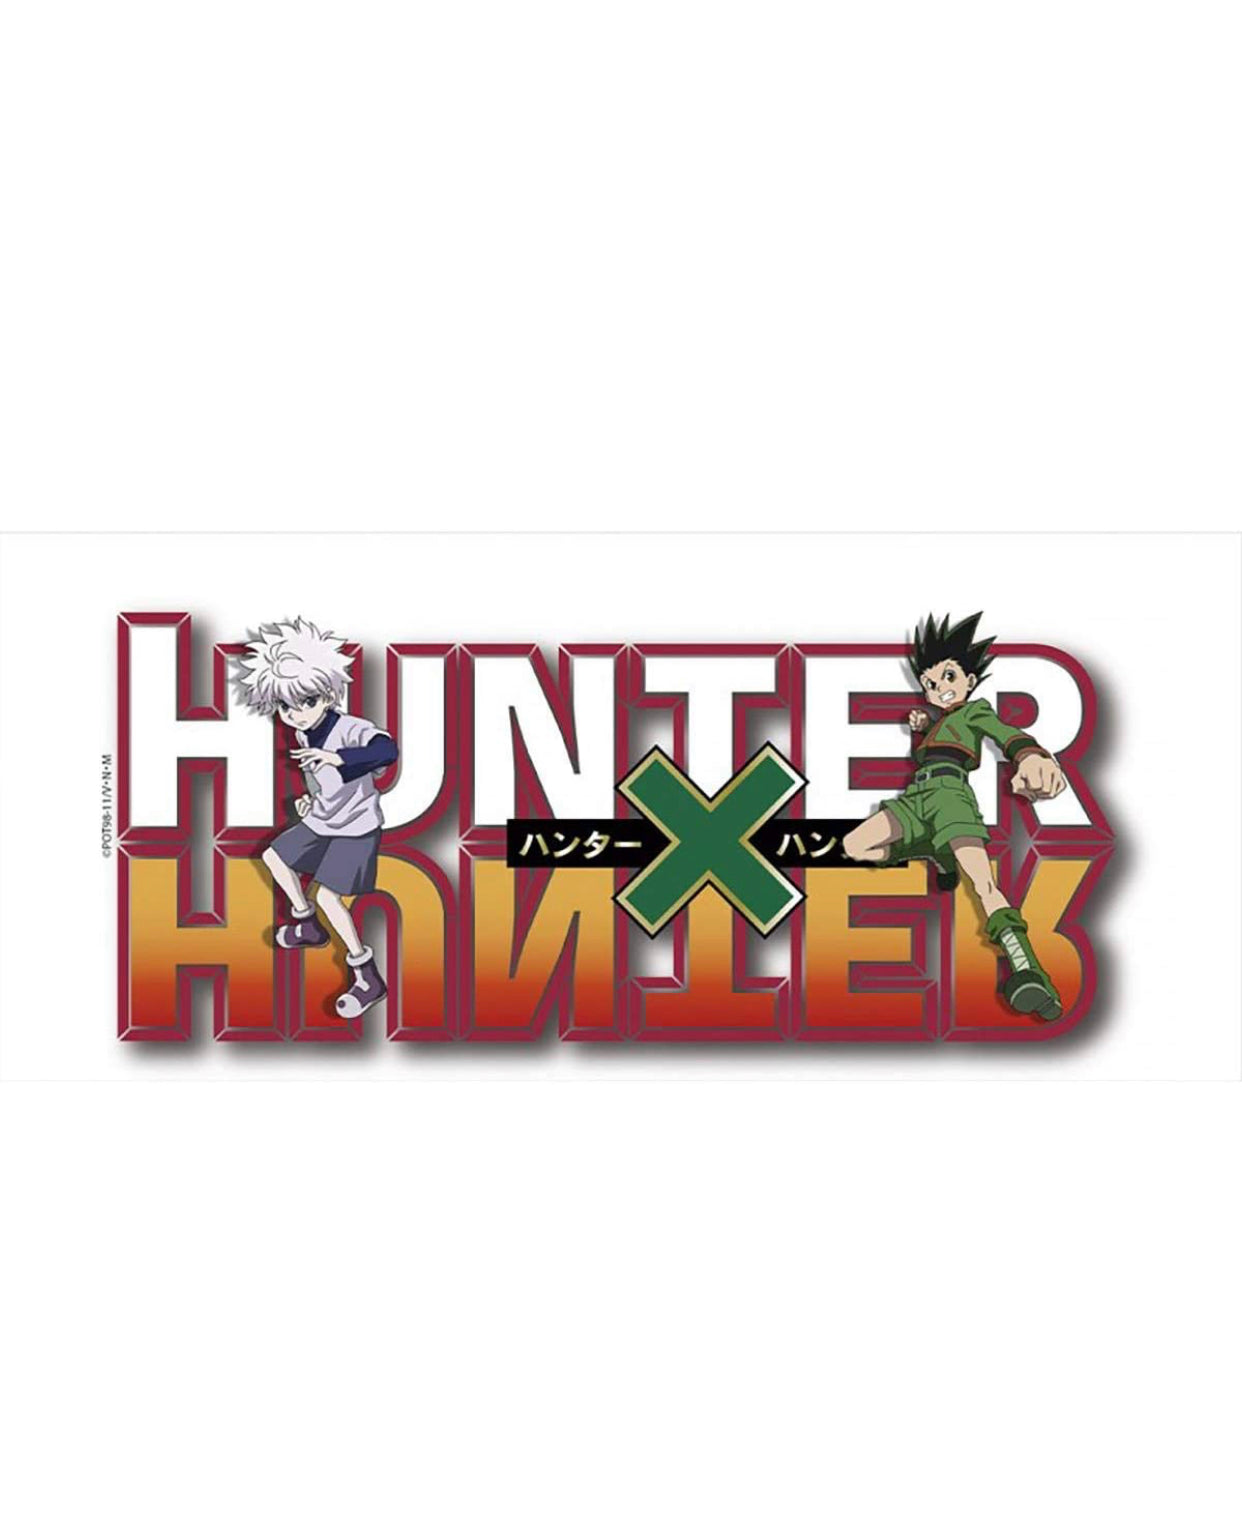 Gon Team Hunter X Hunter Mug